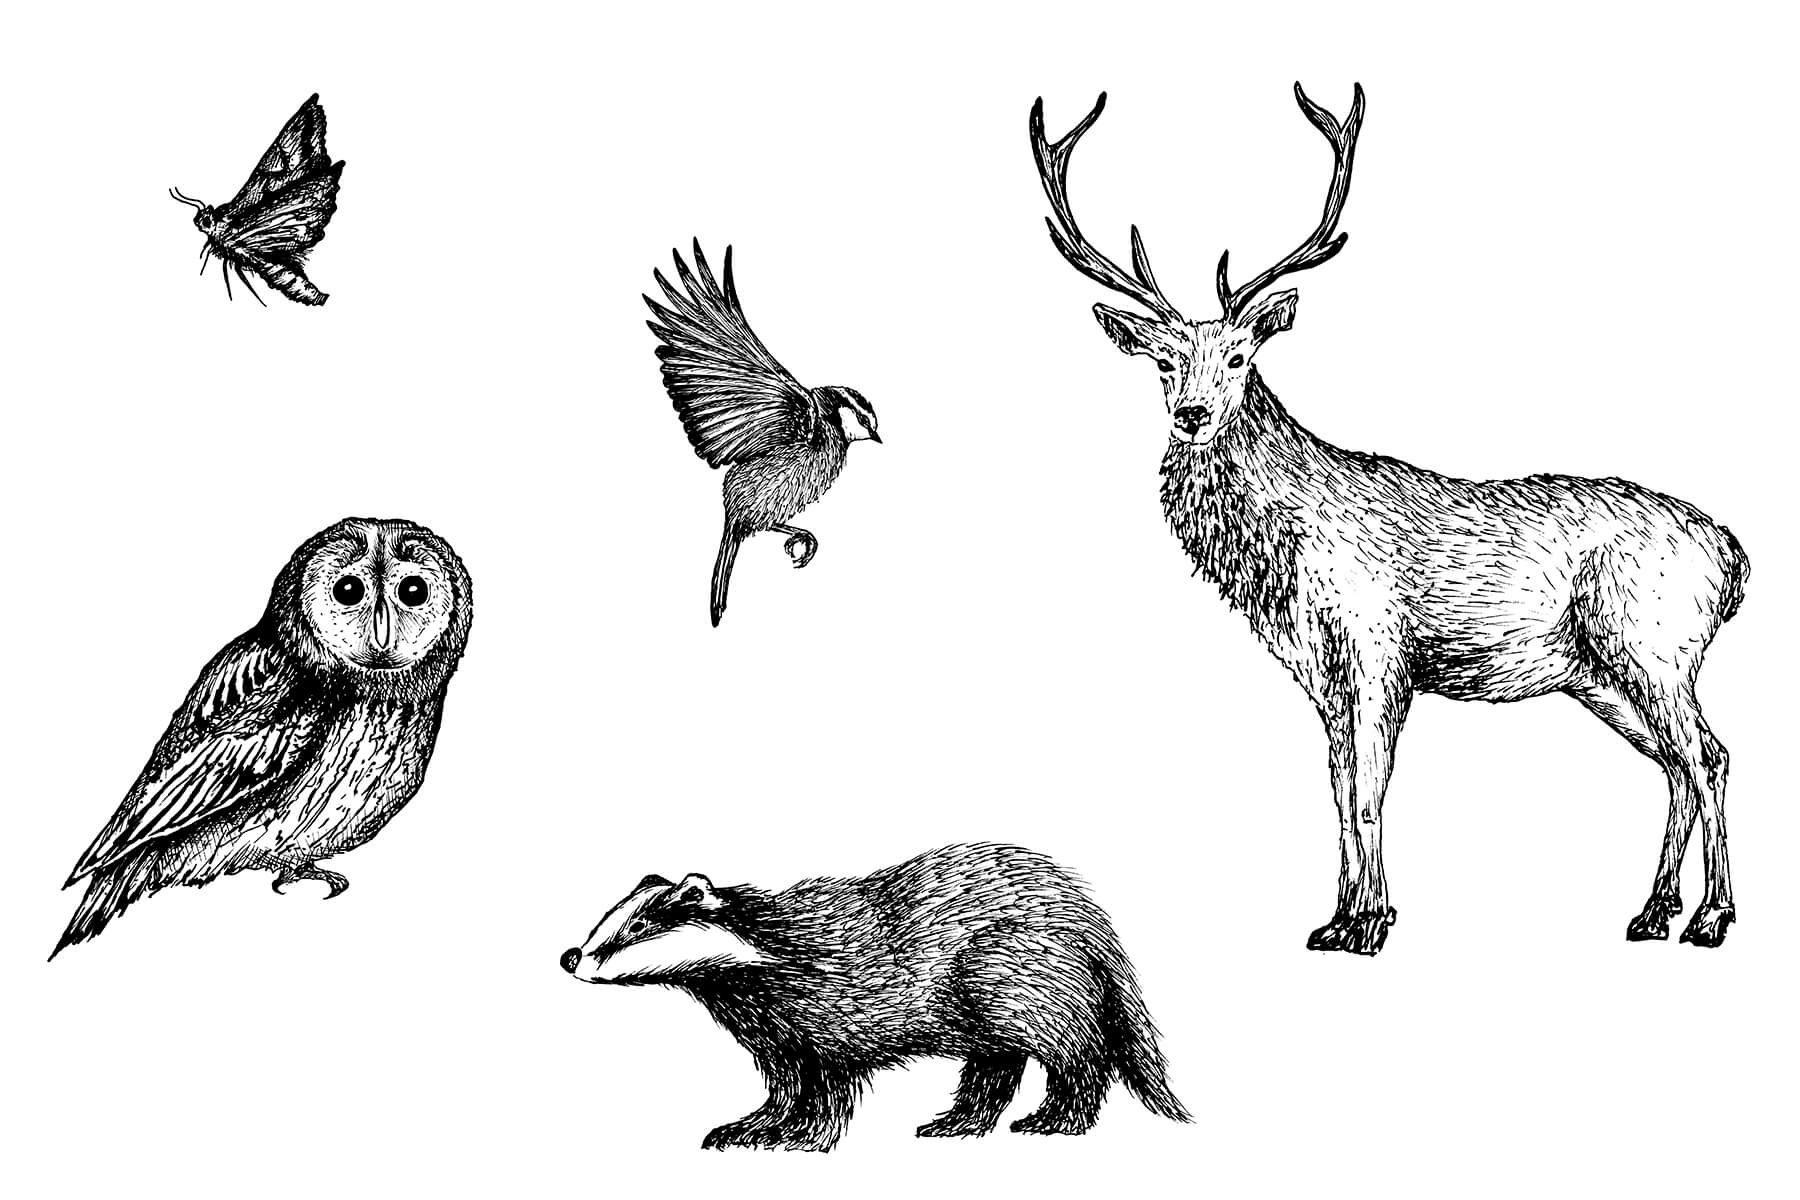 Wytham Woods Illustrations